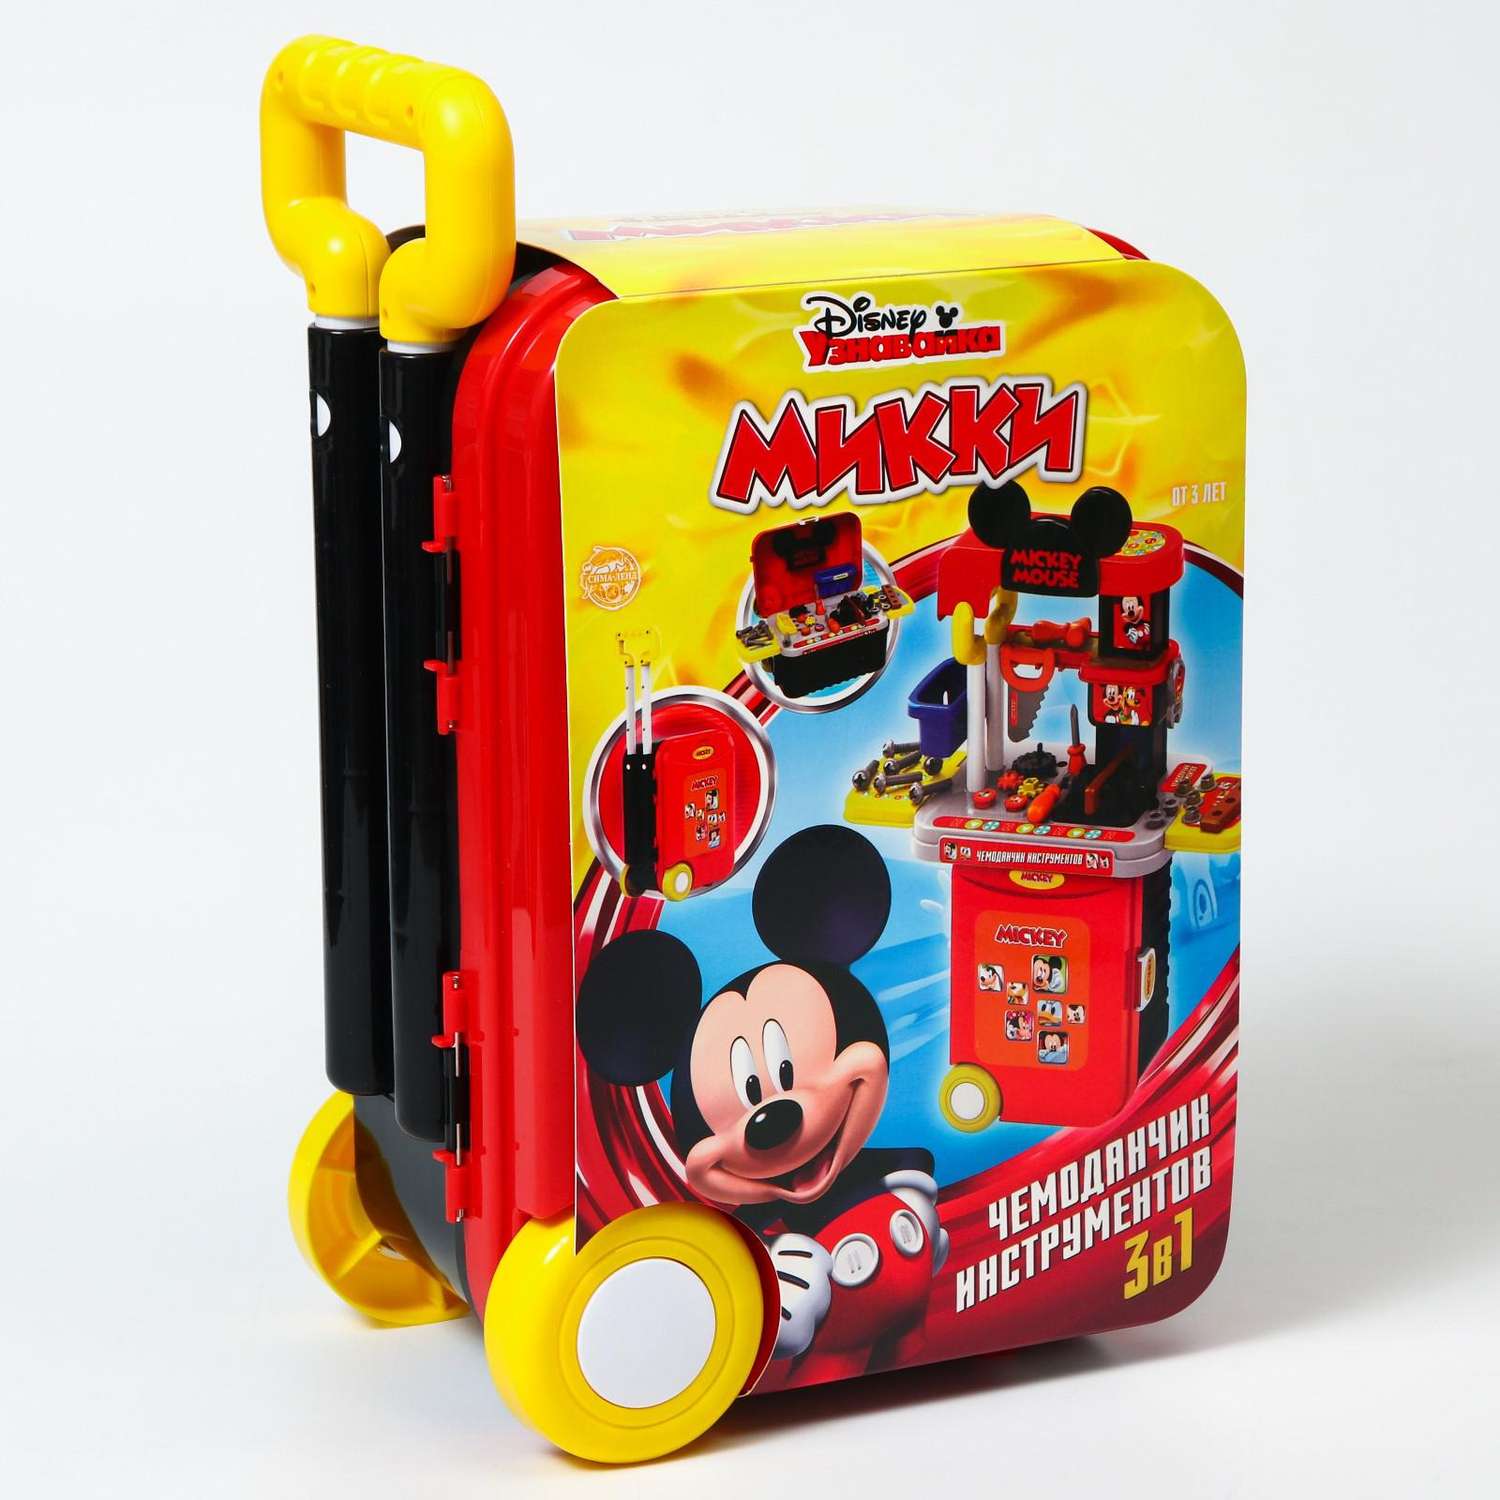 Игровой набор Disney с инструментами Микки Маус 5486327 - фото 1